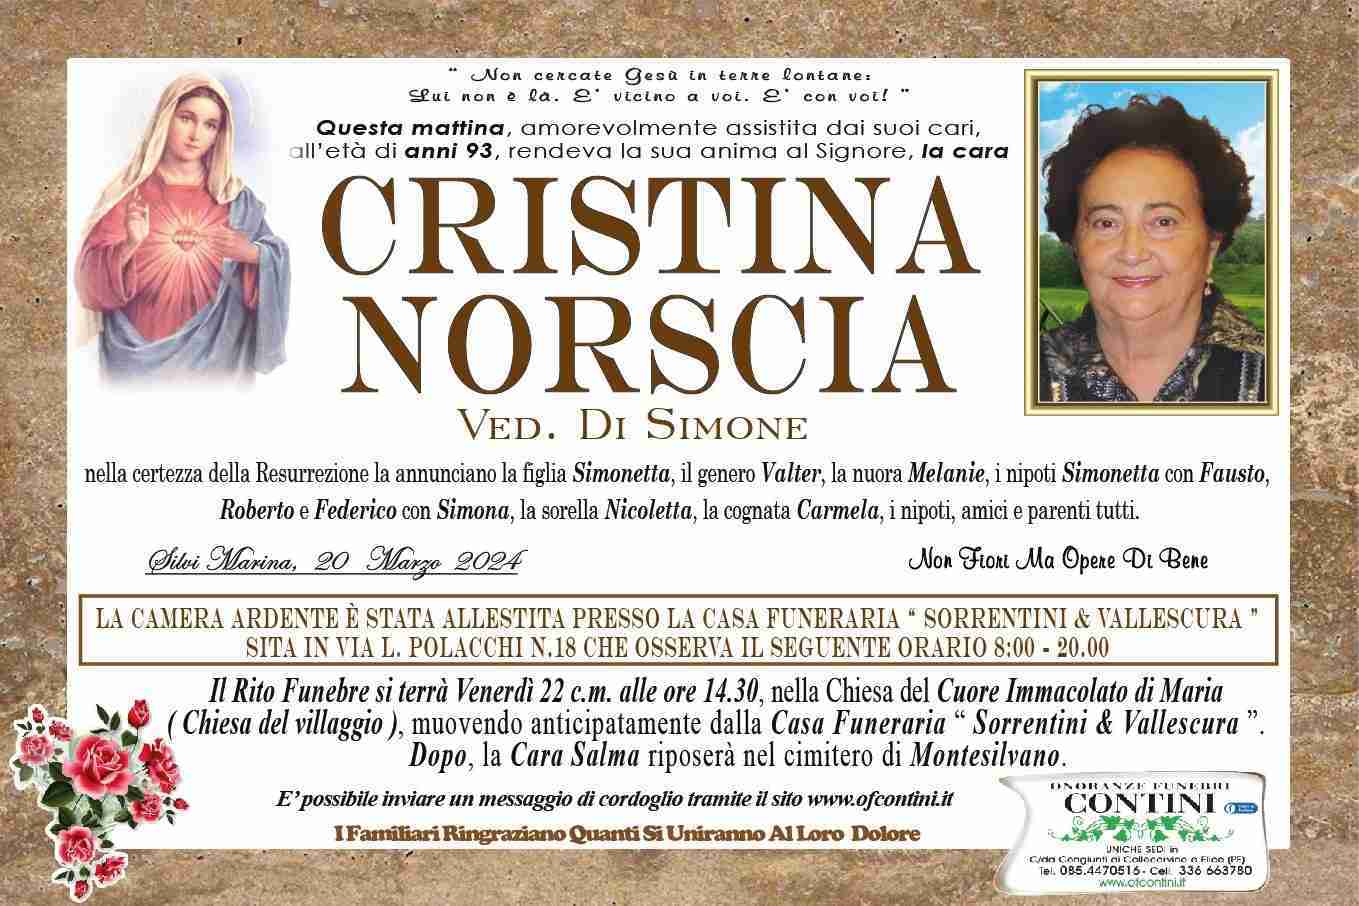 Cristina Norscia